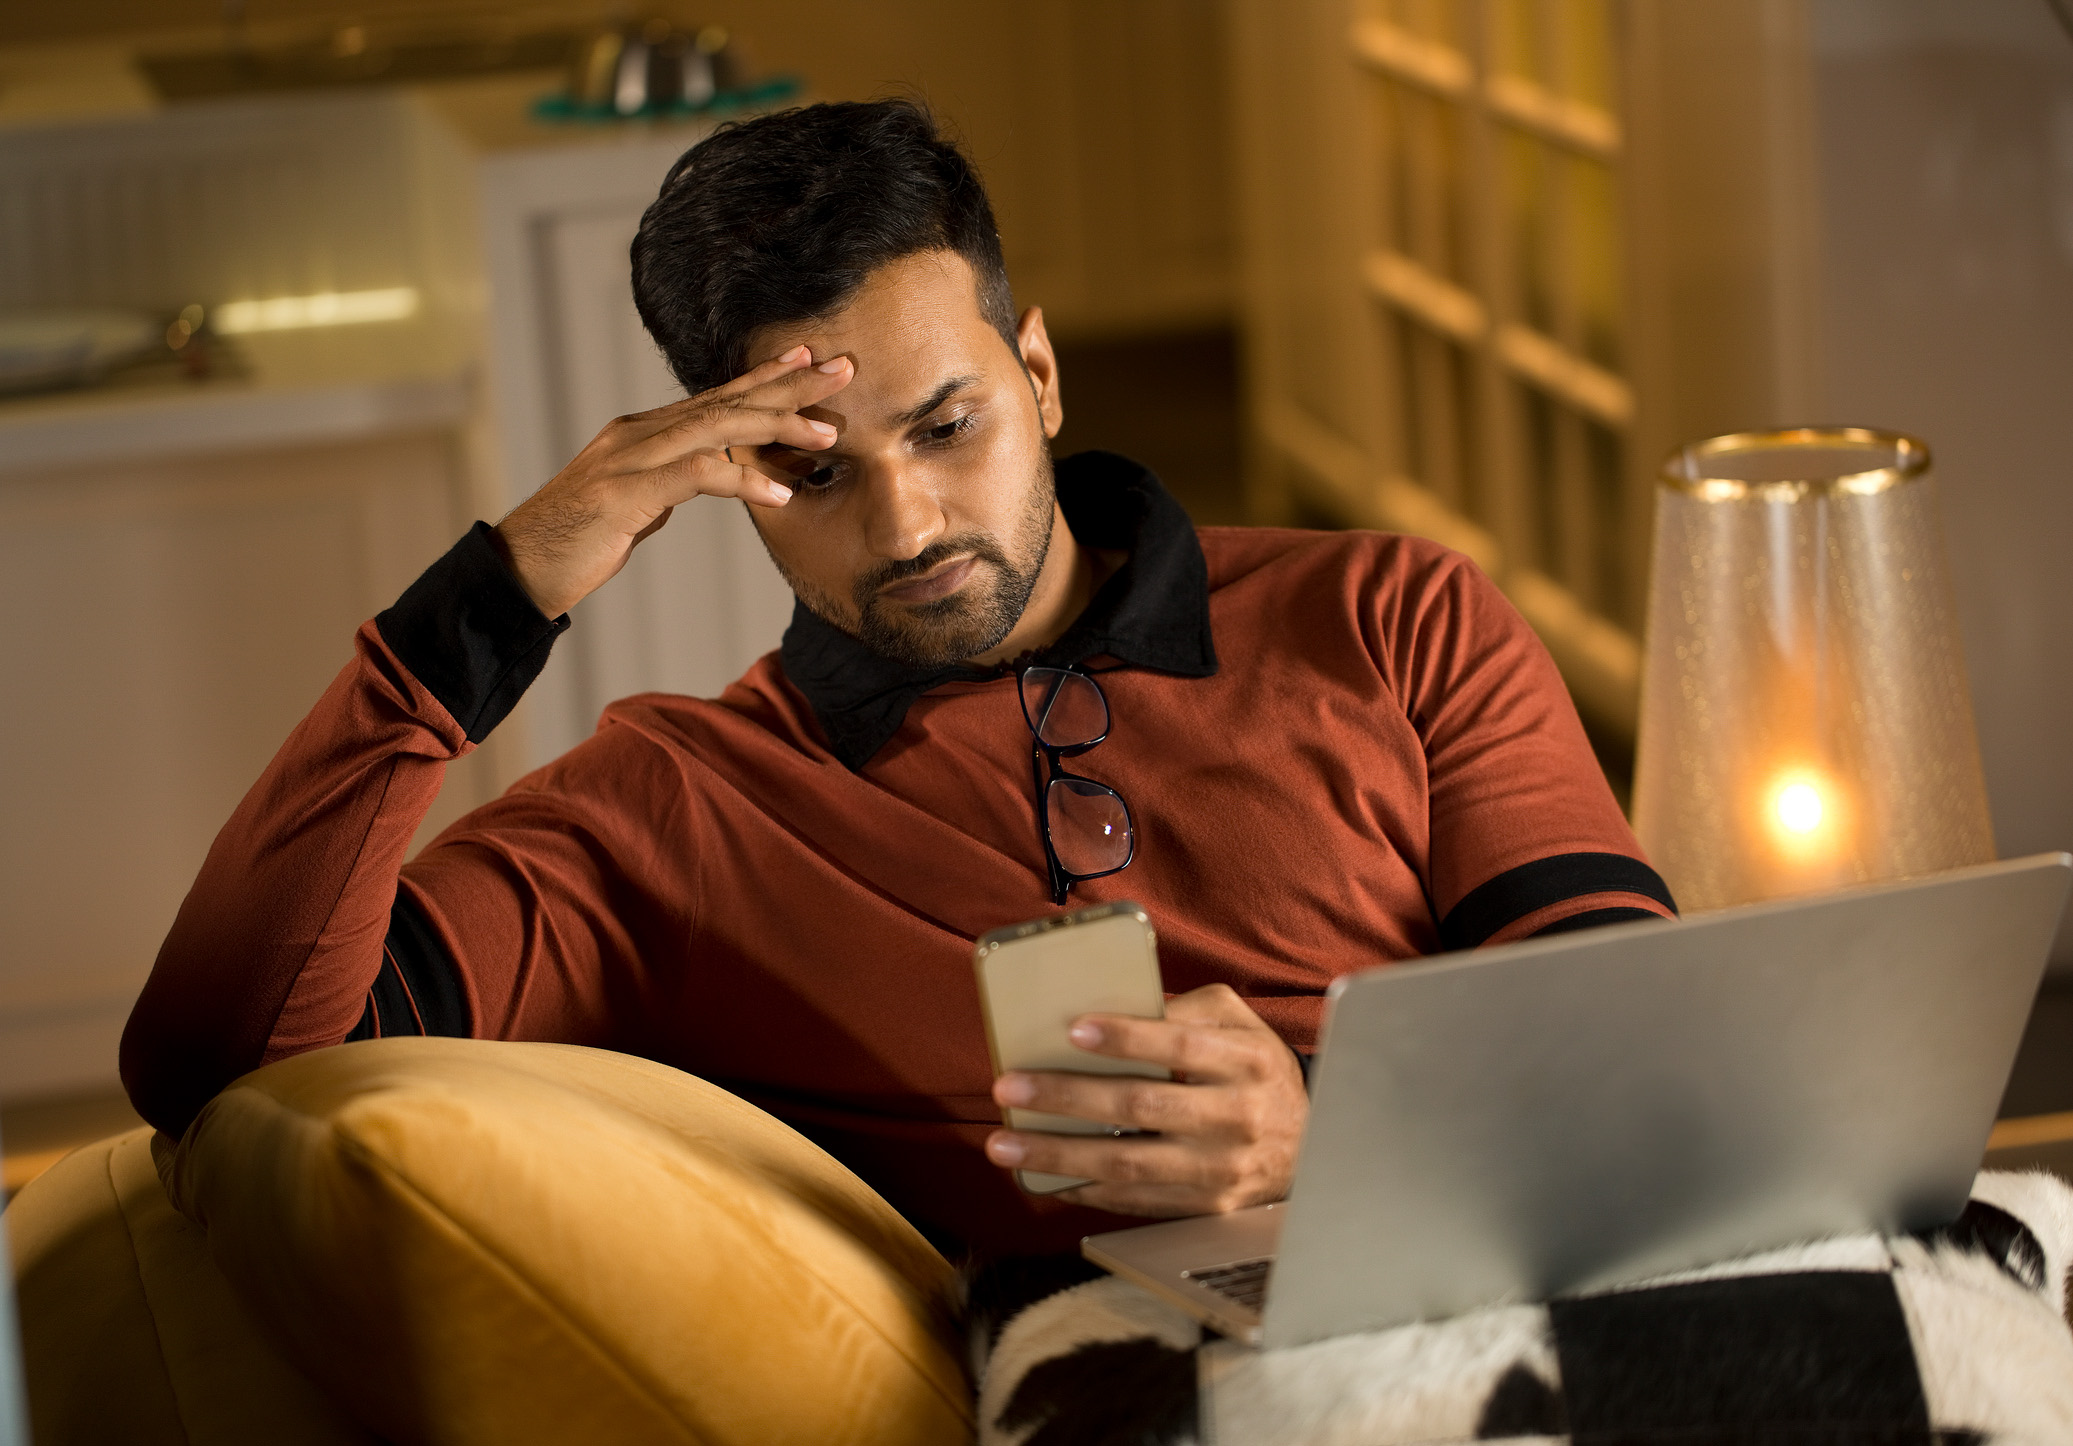 Man feeling depressed on receiving bad news using phone